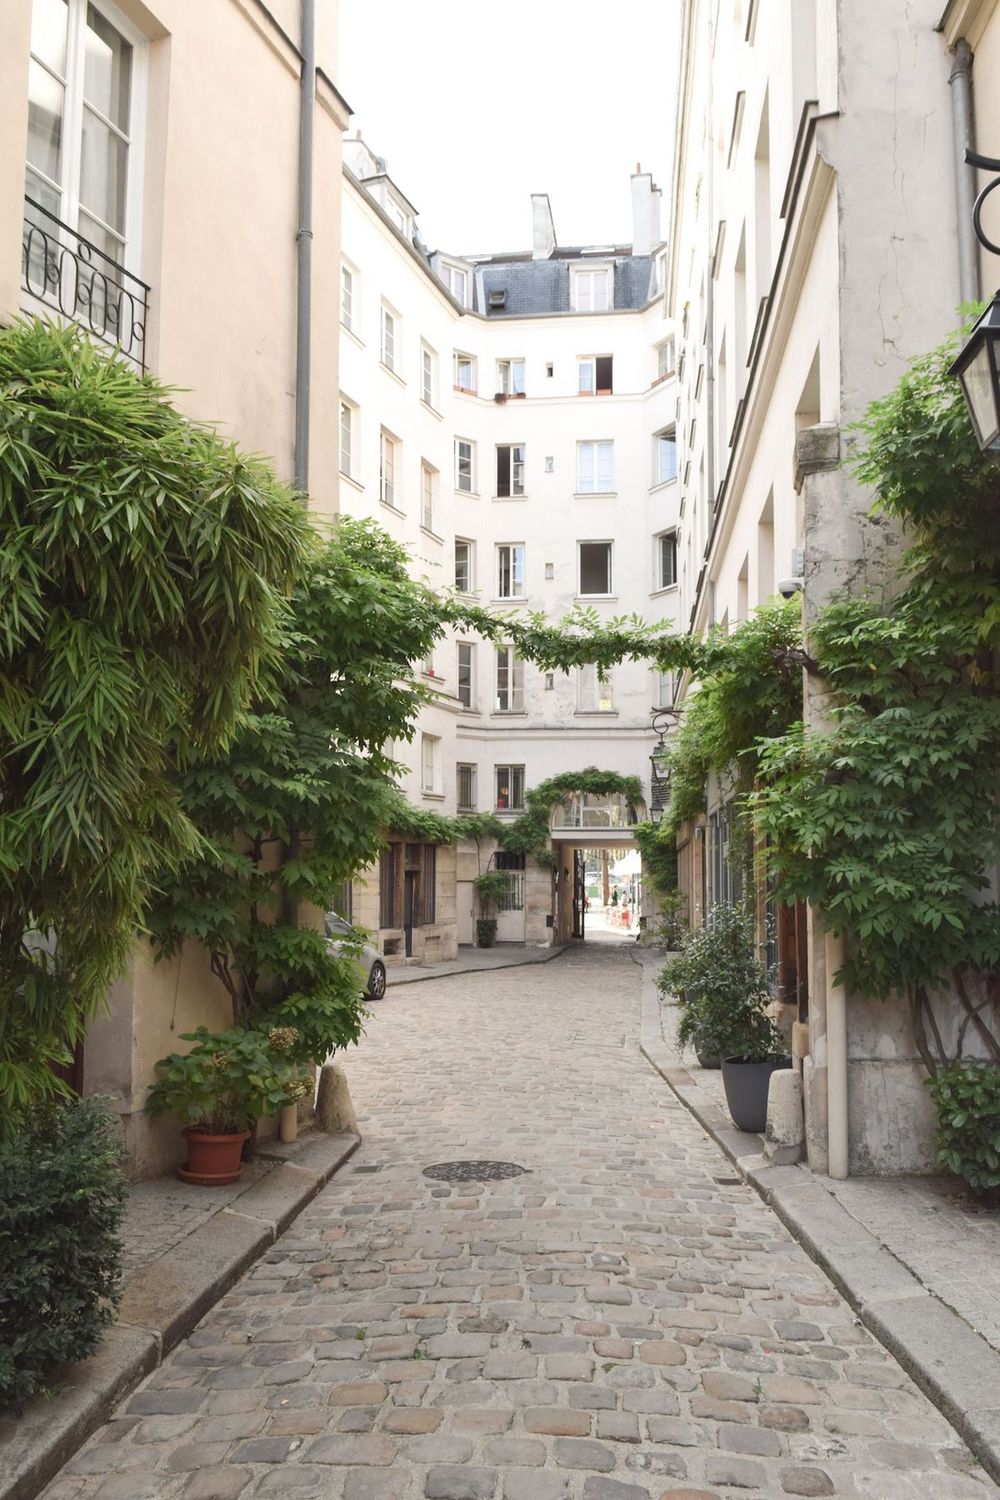 Cour Damoye: a hidden passageway near Bastille in Paris